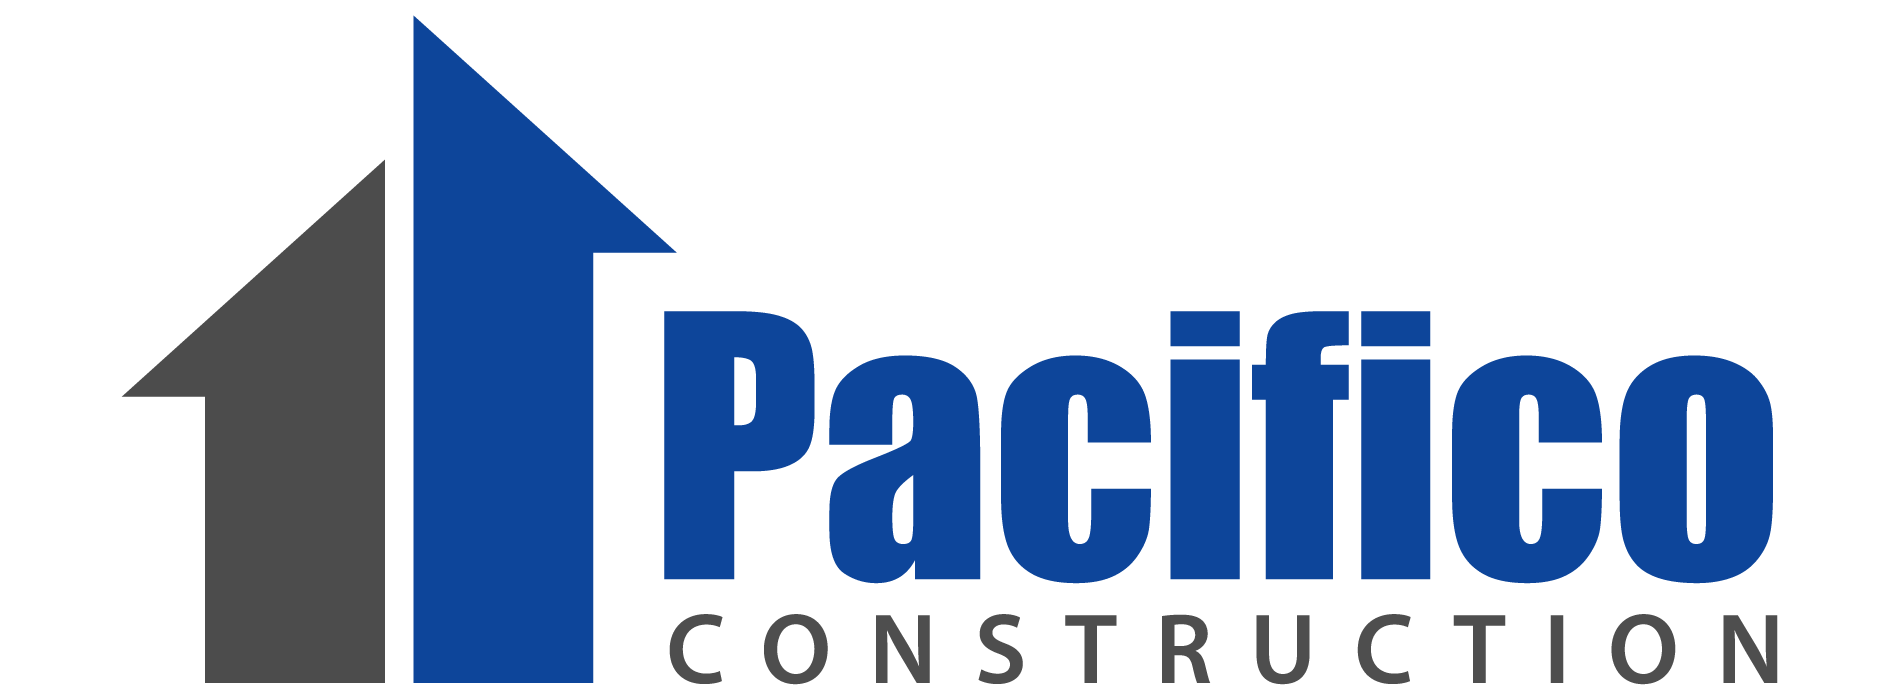 Pacifico Construction